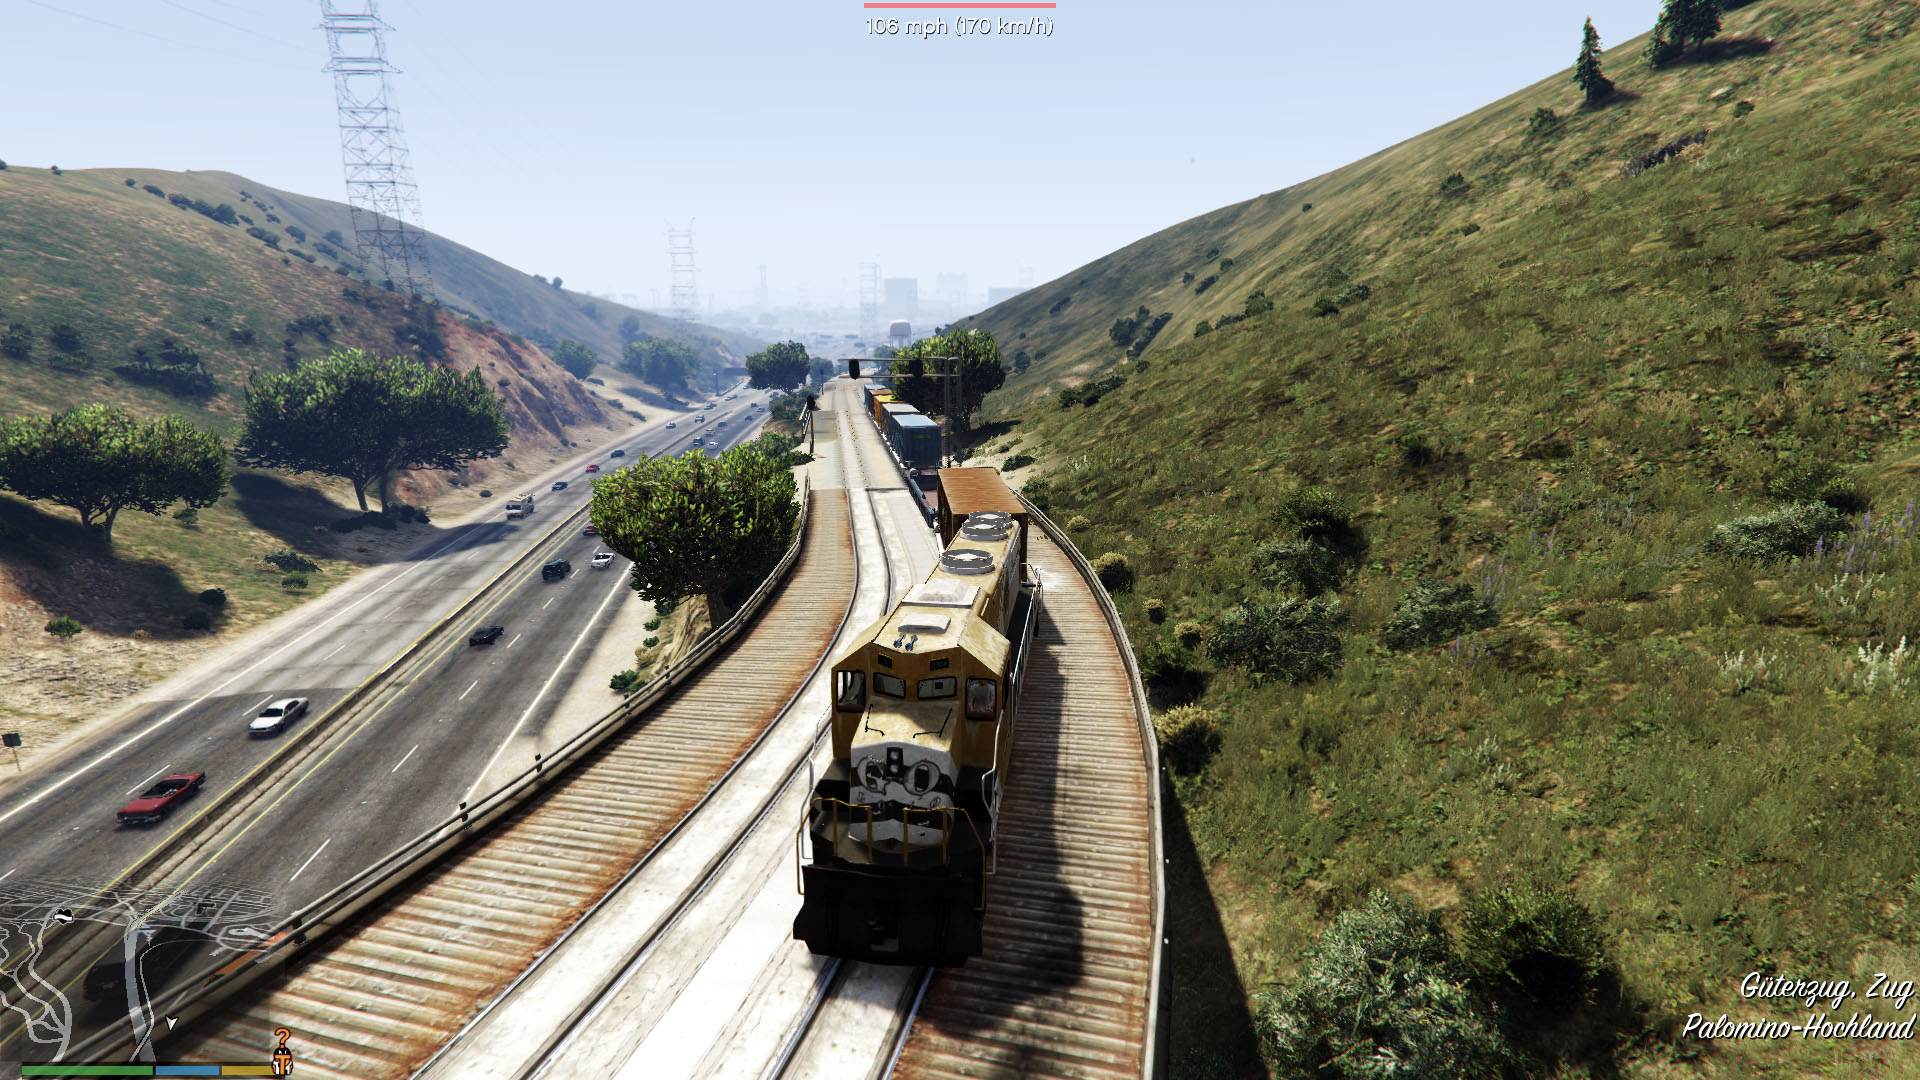 Railroad Engineer (train mod with derailment) - GTA5-Mods.com